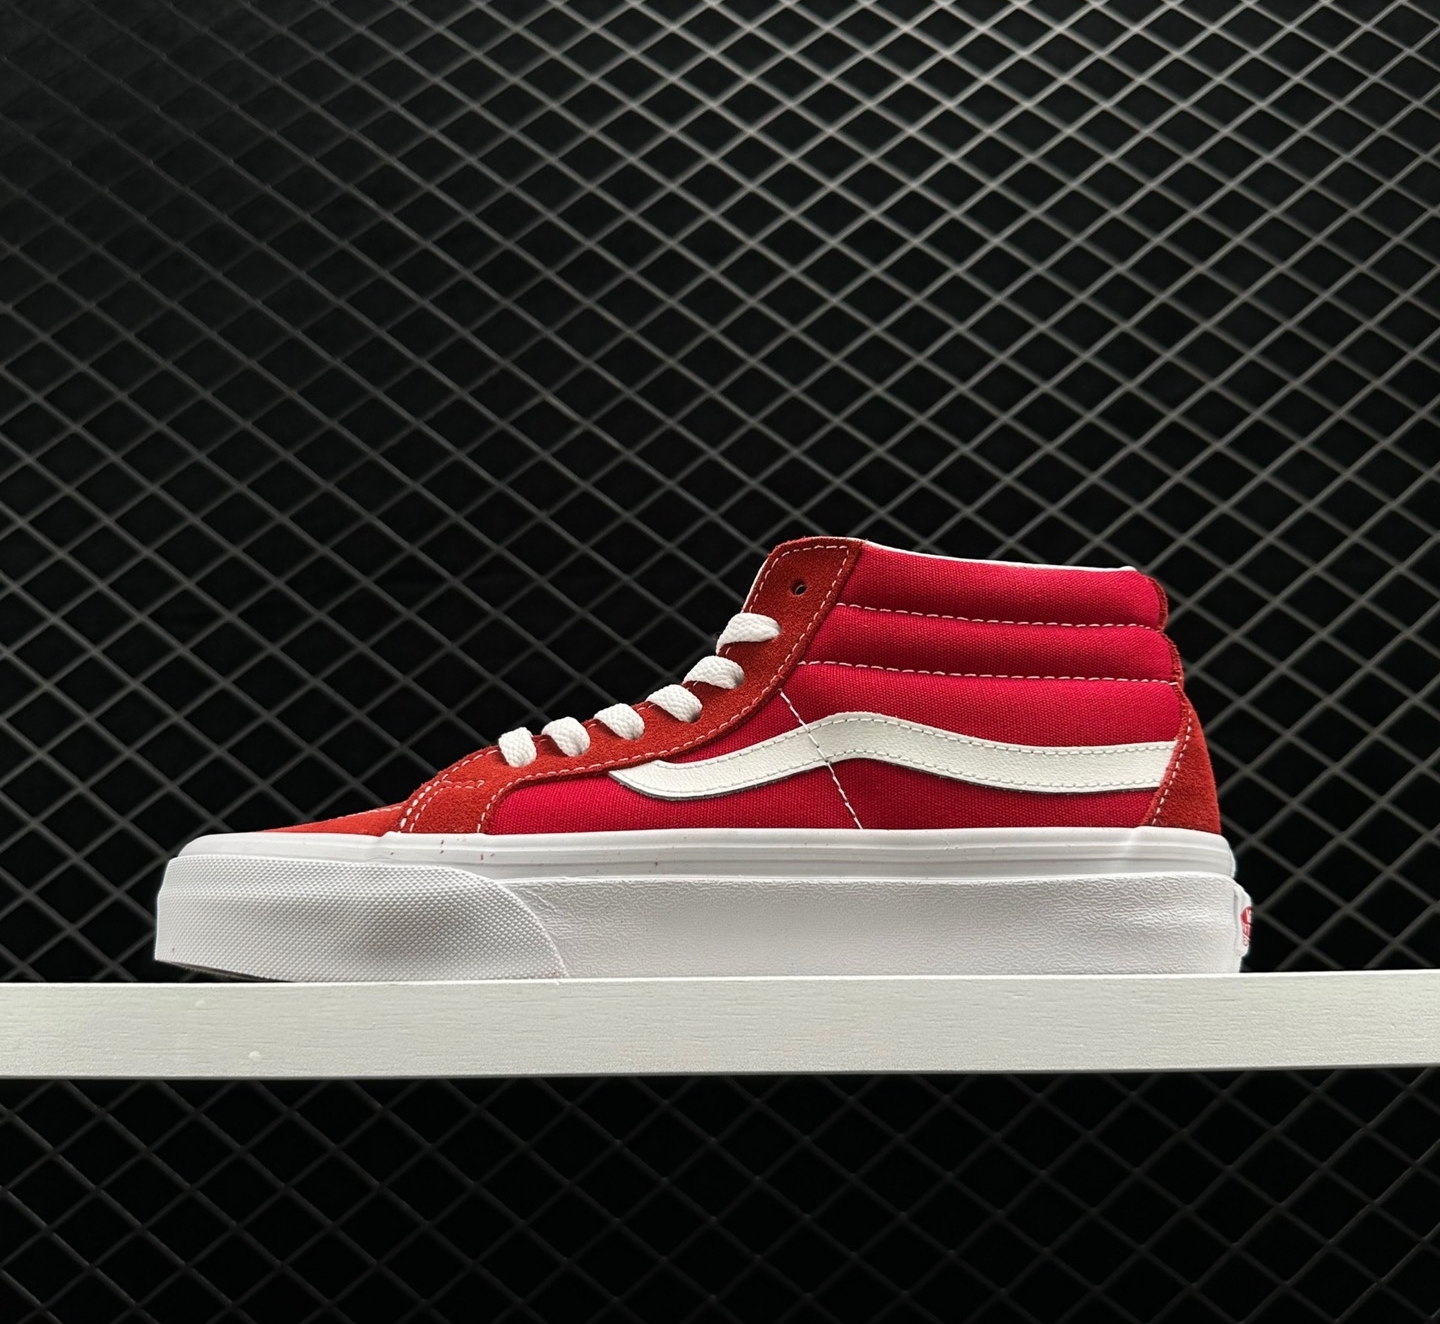 Vans SK8-Mid Mid-Top Skate Shoes Red Unisex - Buy Online Now!